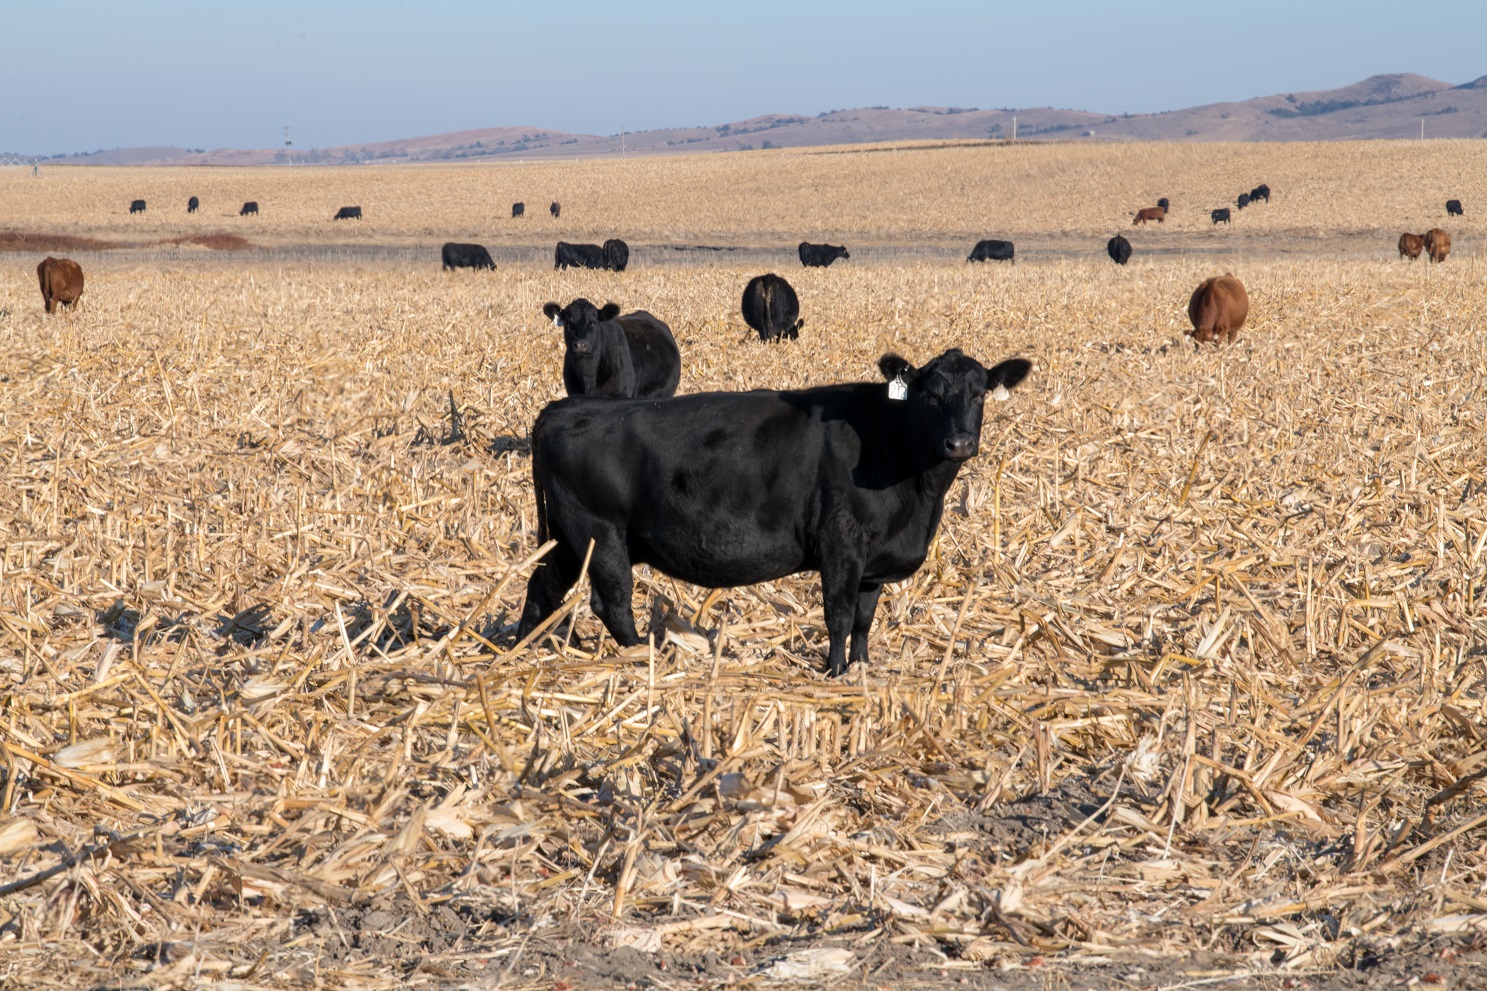 Cow on corn stalks